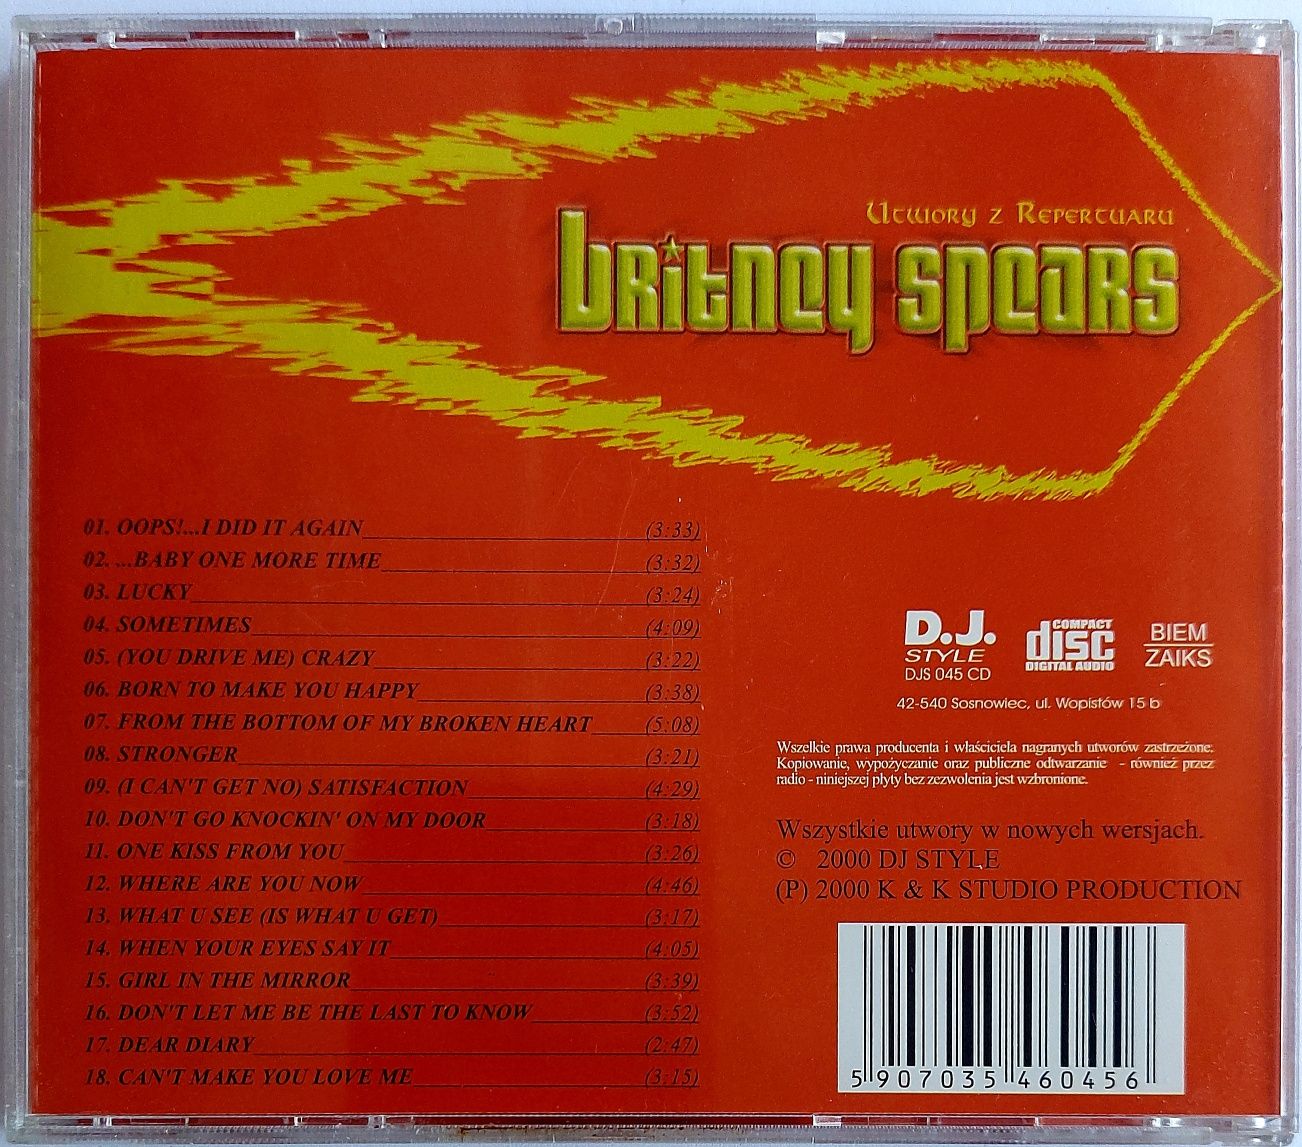 Britney Spears Utwory Z Repertuaru Britney Spears 2000r